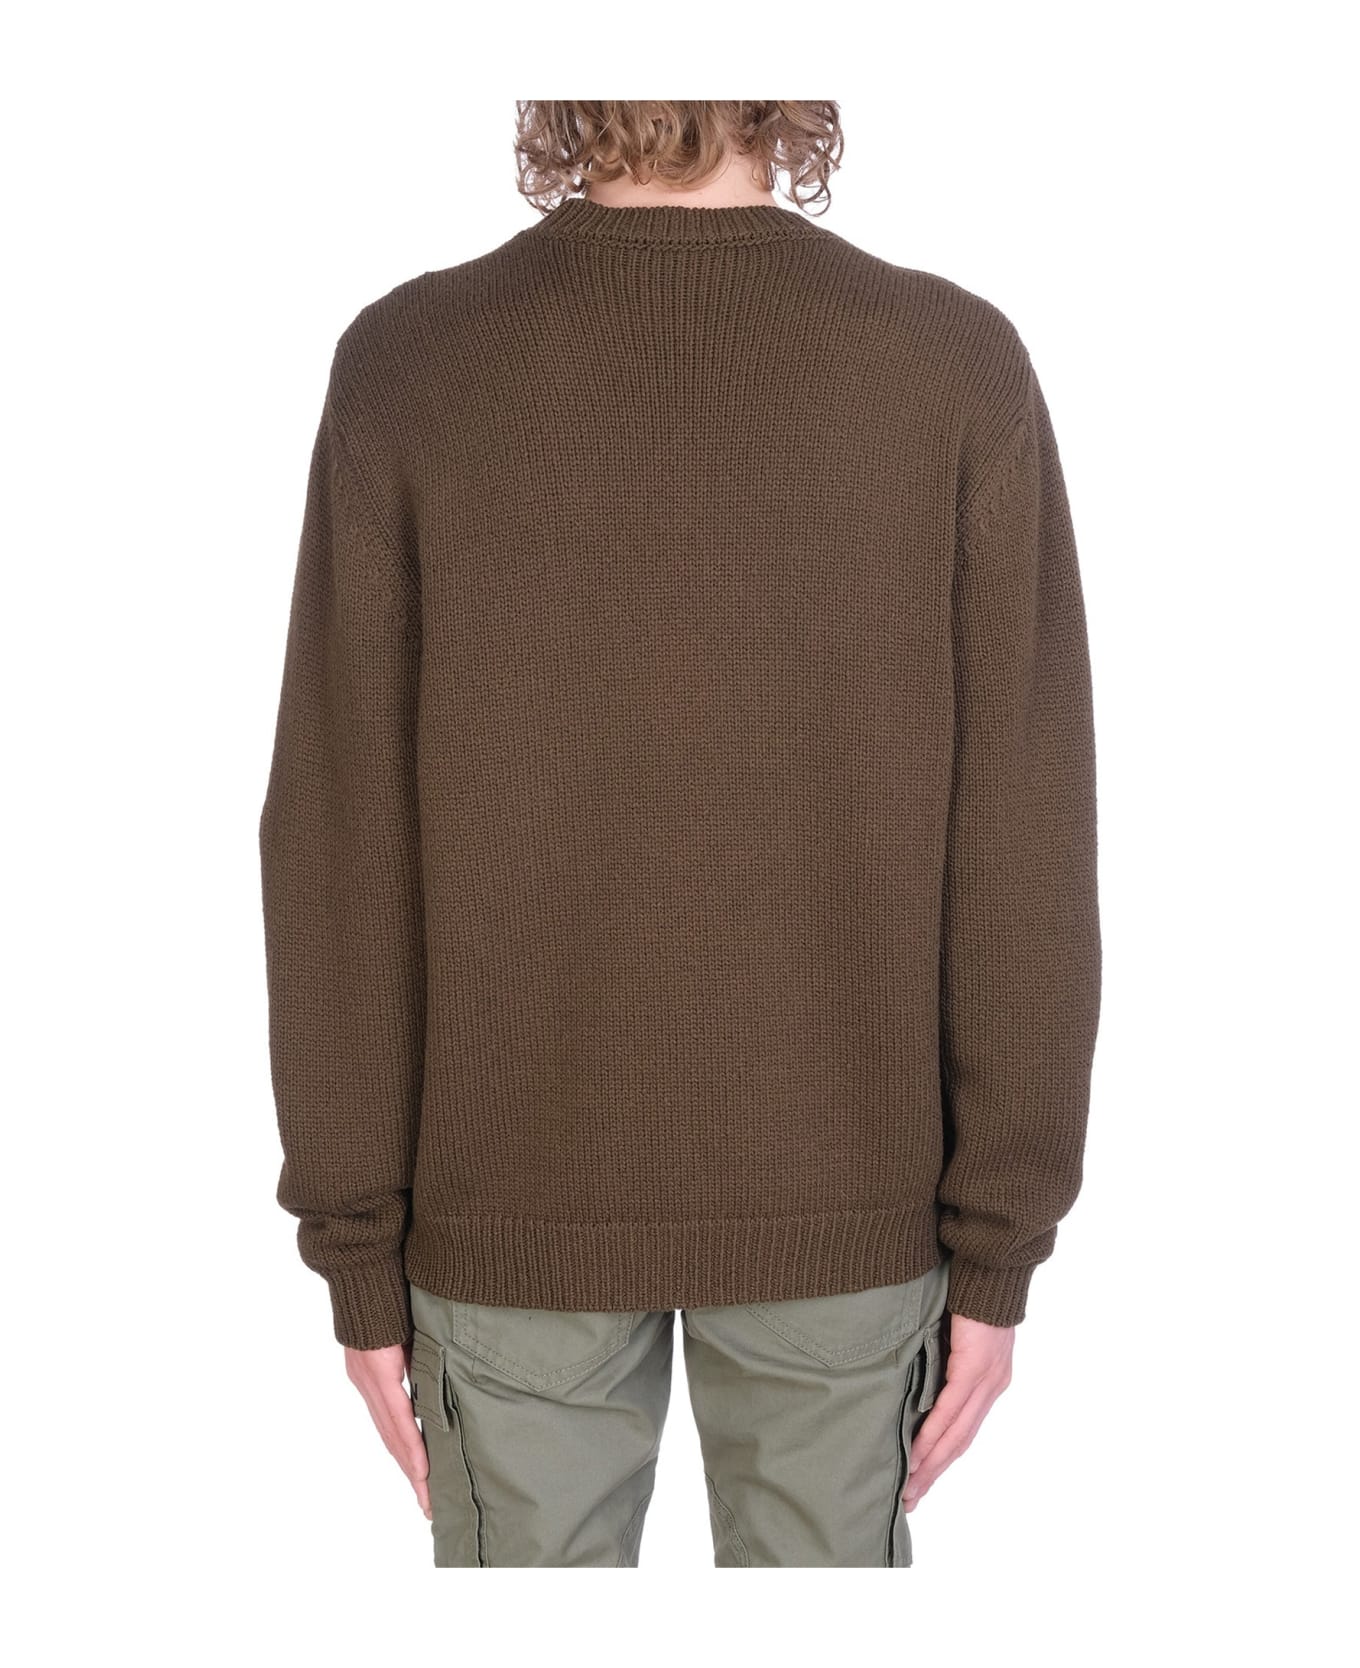 Balmain Wool Logo Sweater - Brown